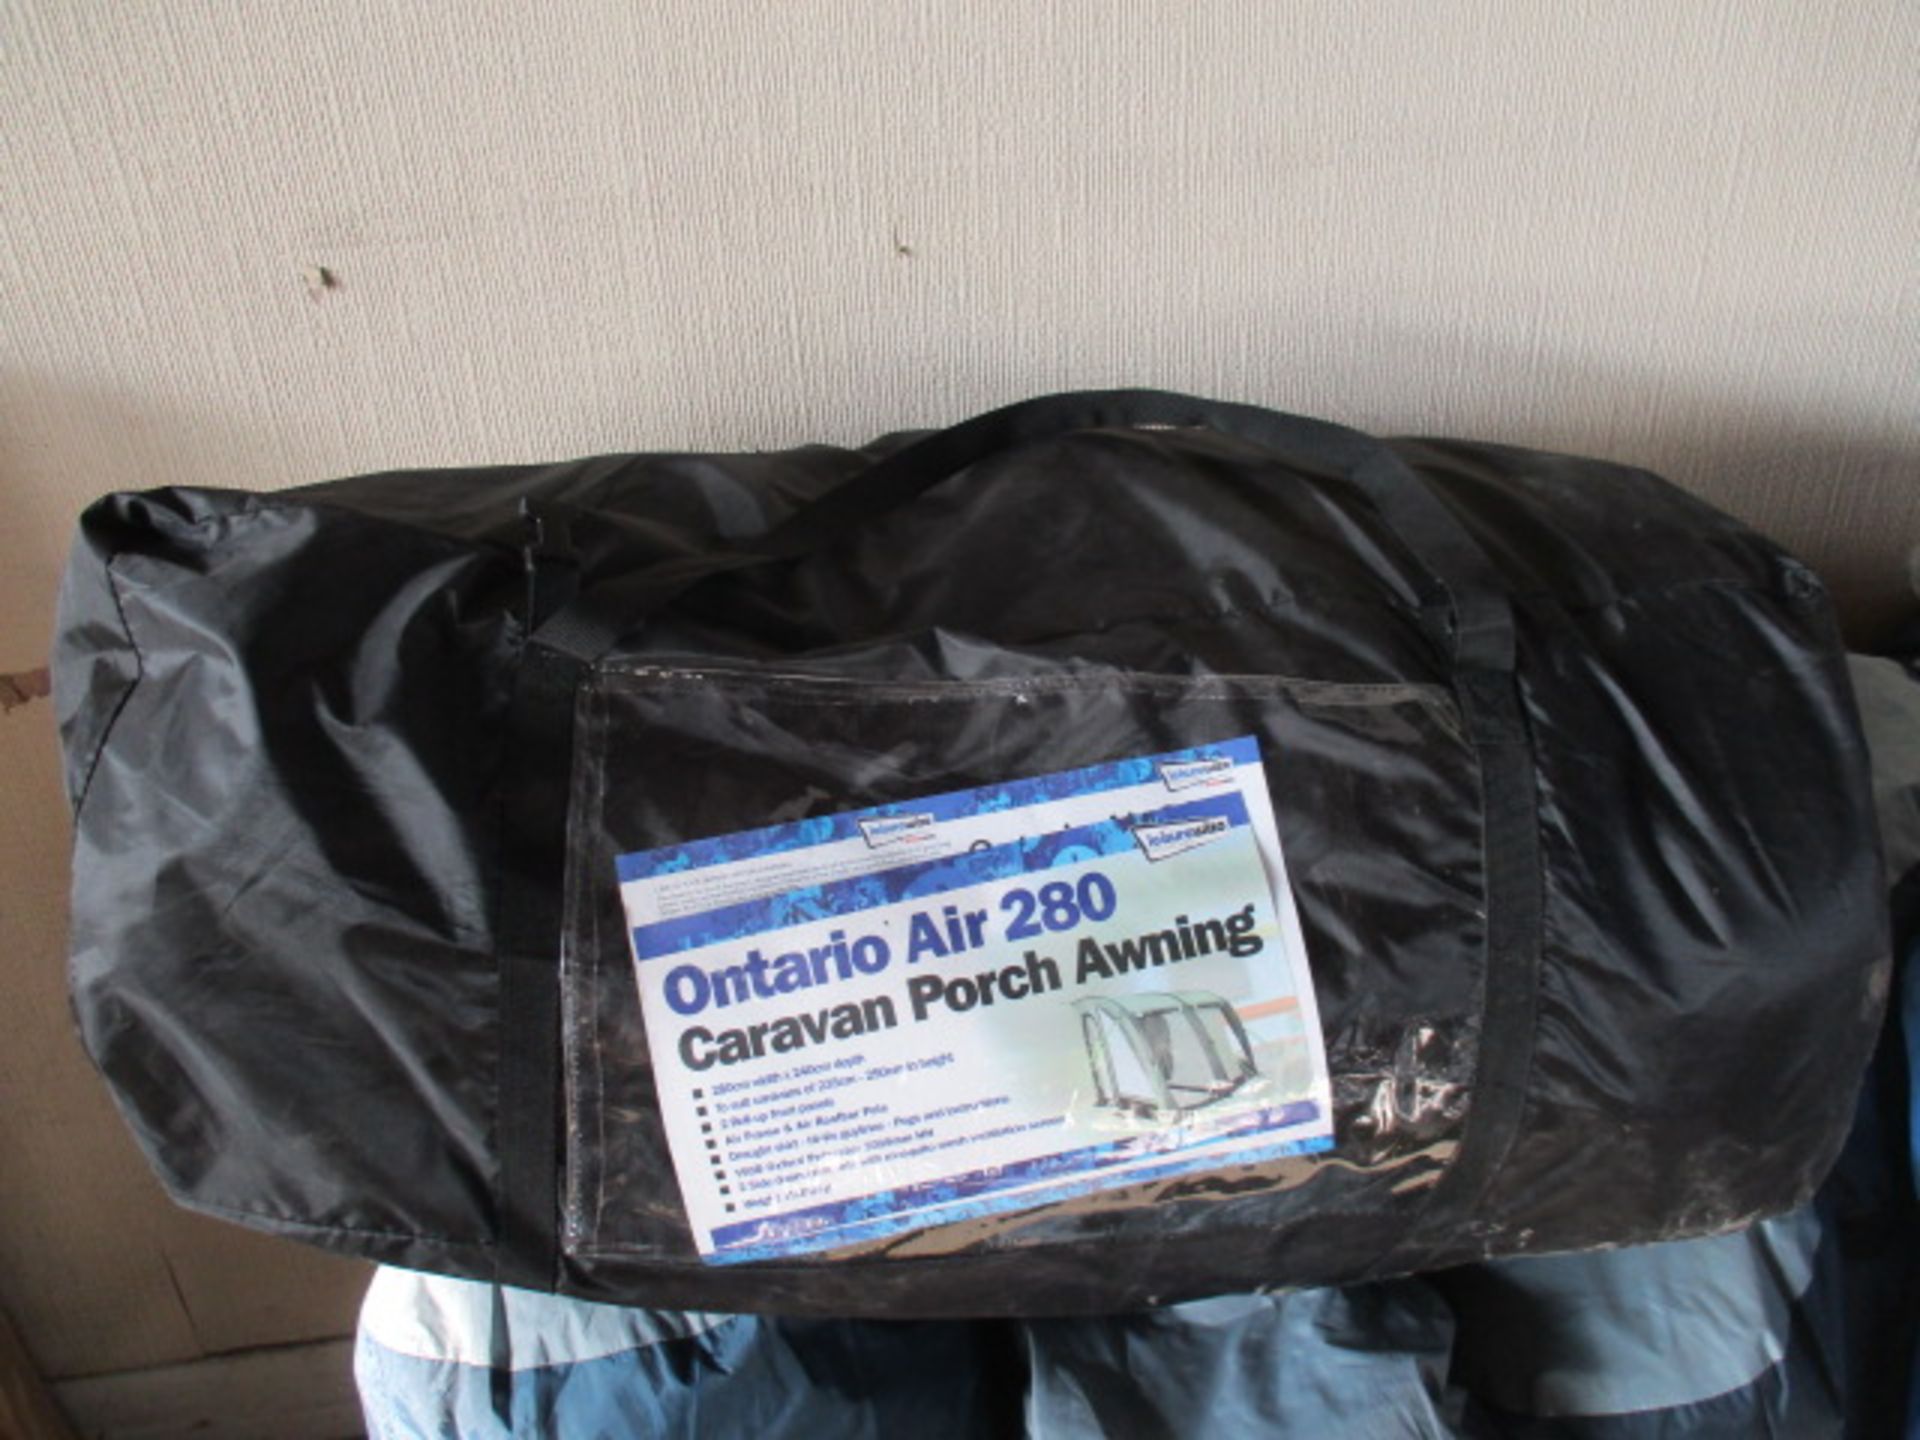 Ontario air 280 caravan porch awning RRP 569.00